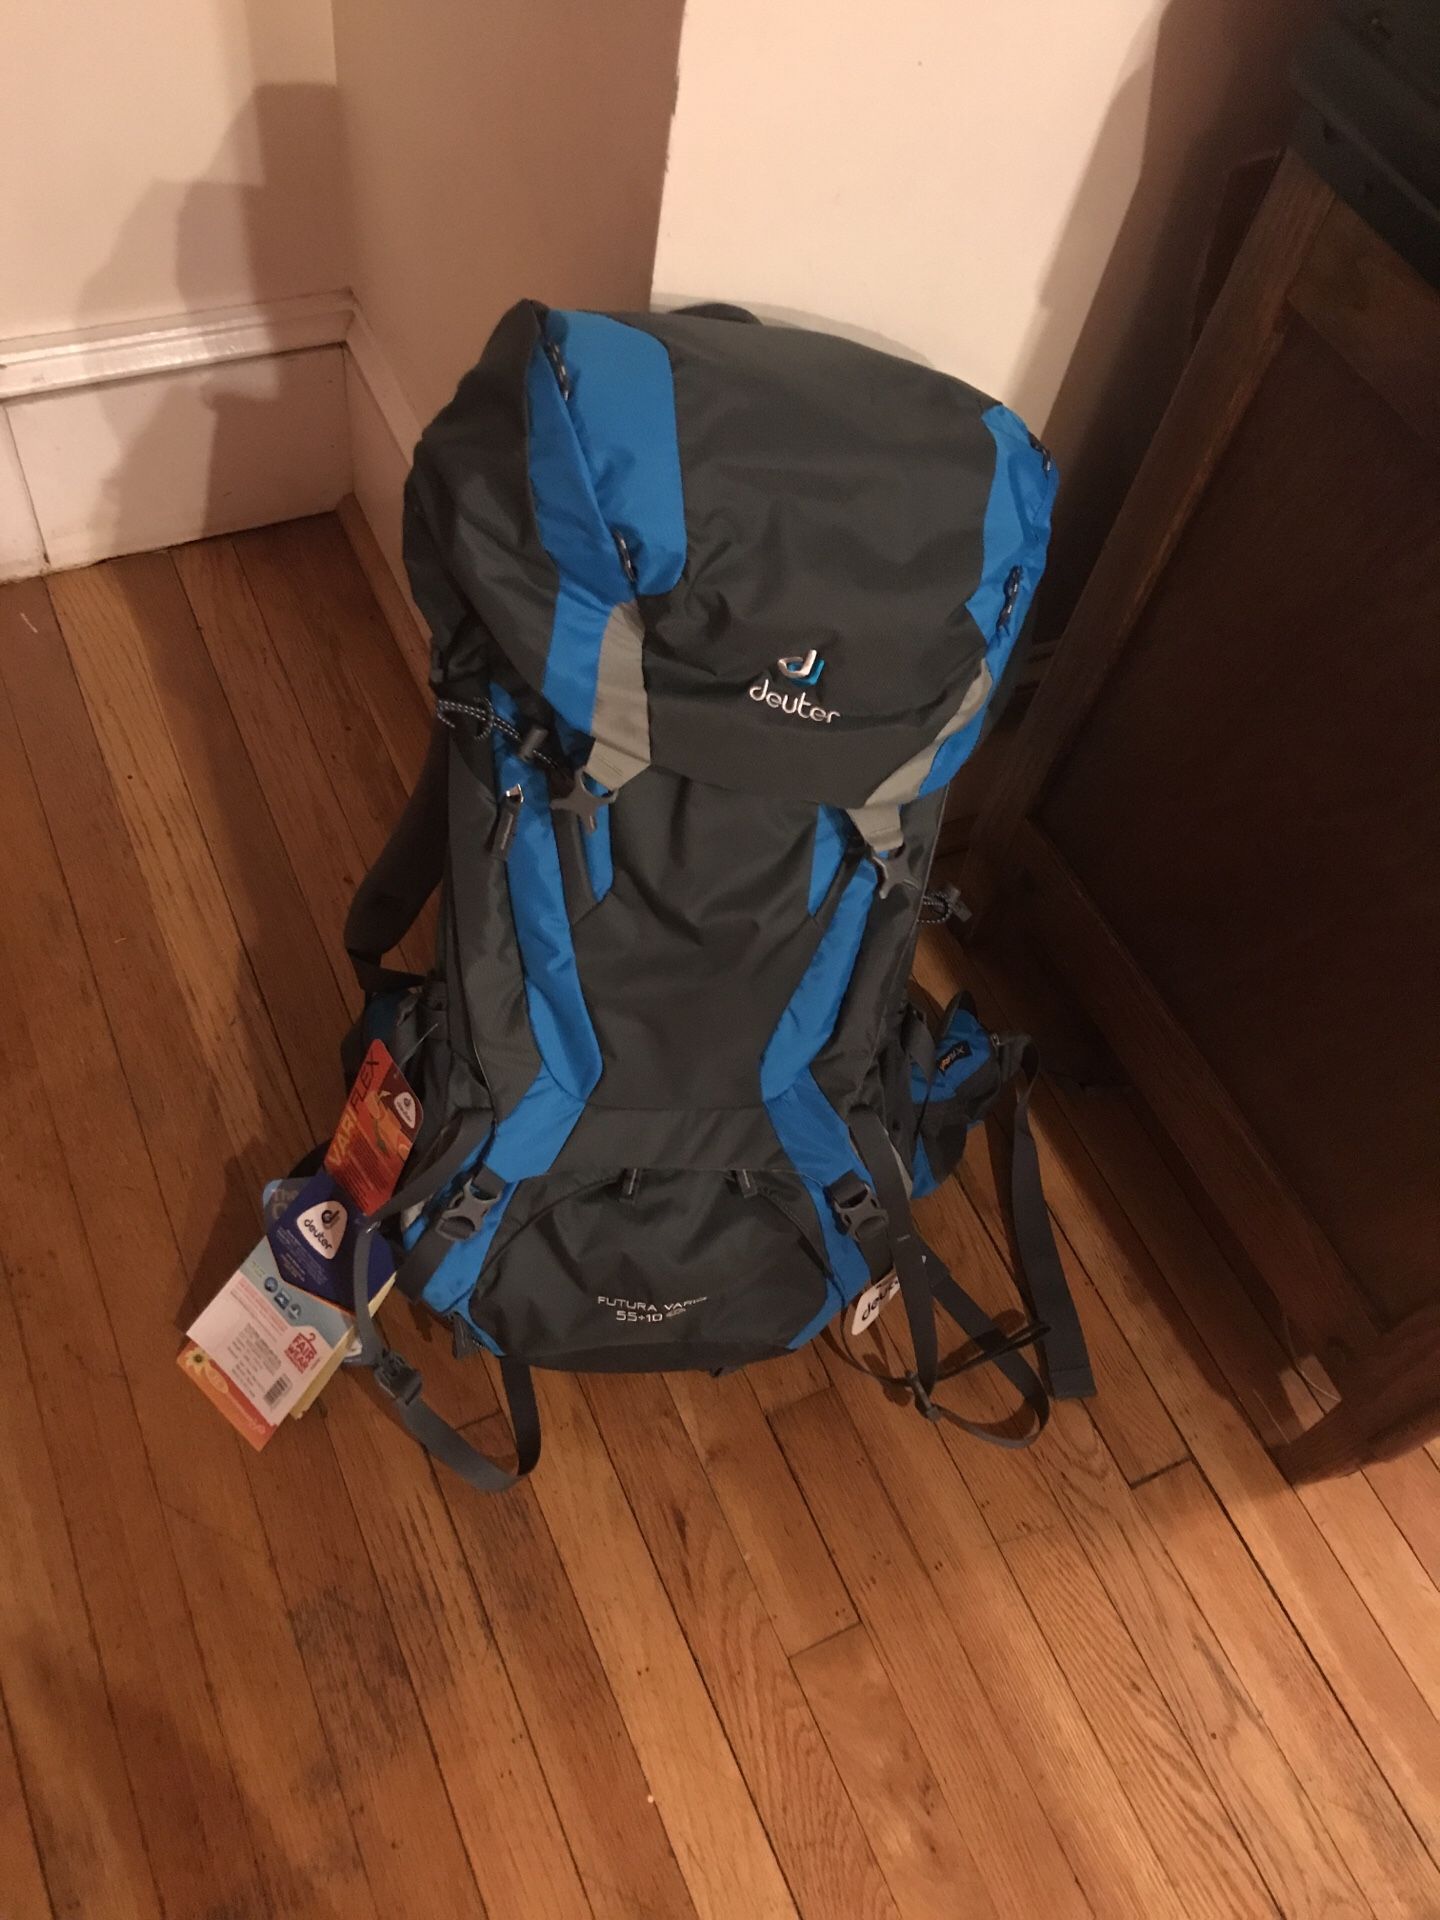 Deuter futera 50+10 backpack